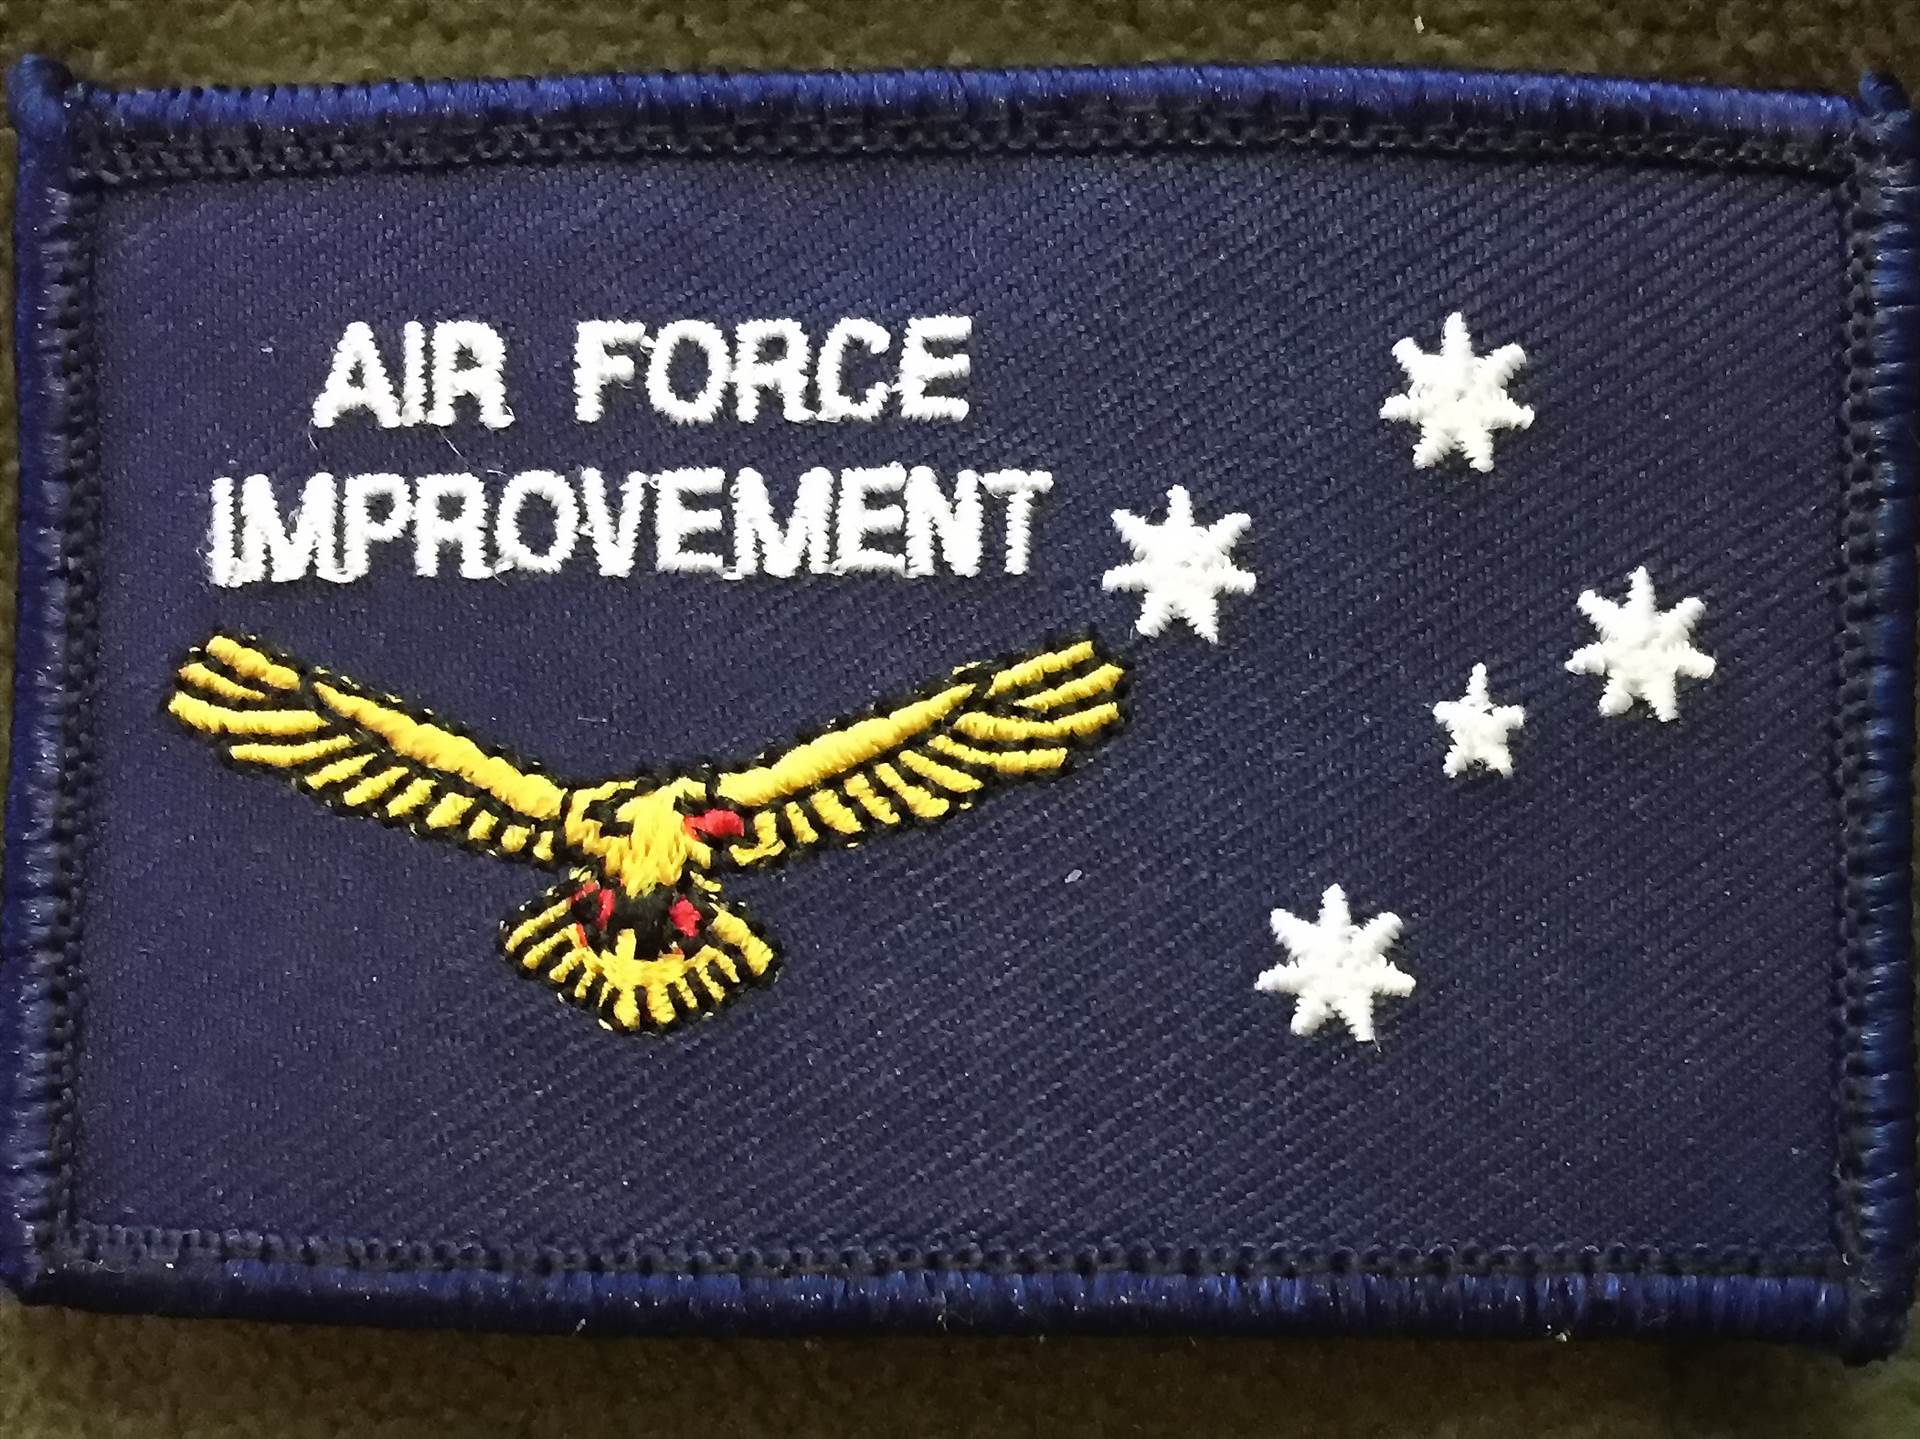 Air Force Improvement RAAF: Air Force Improvement by johntorcasio